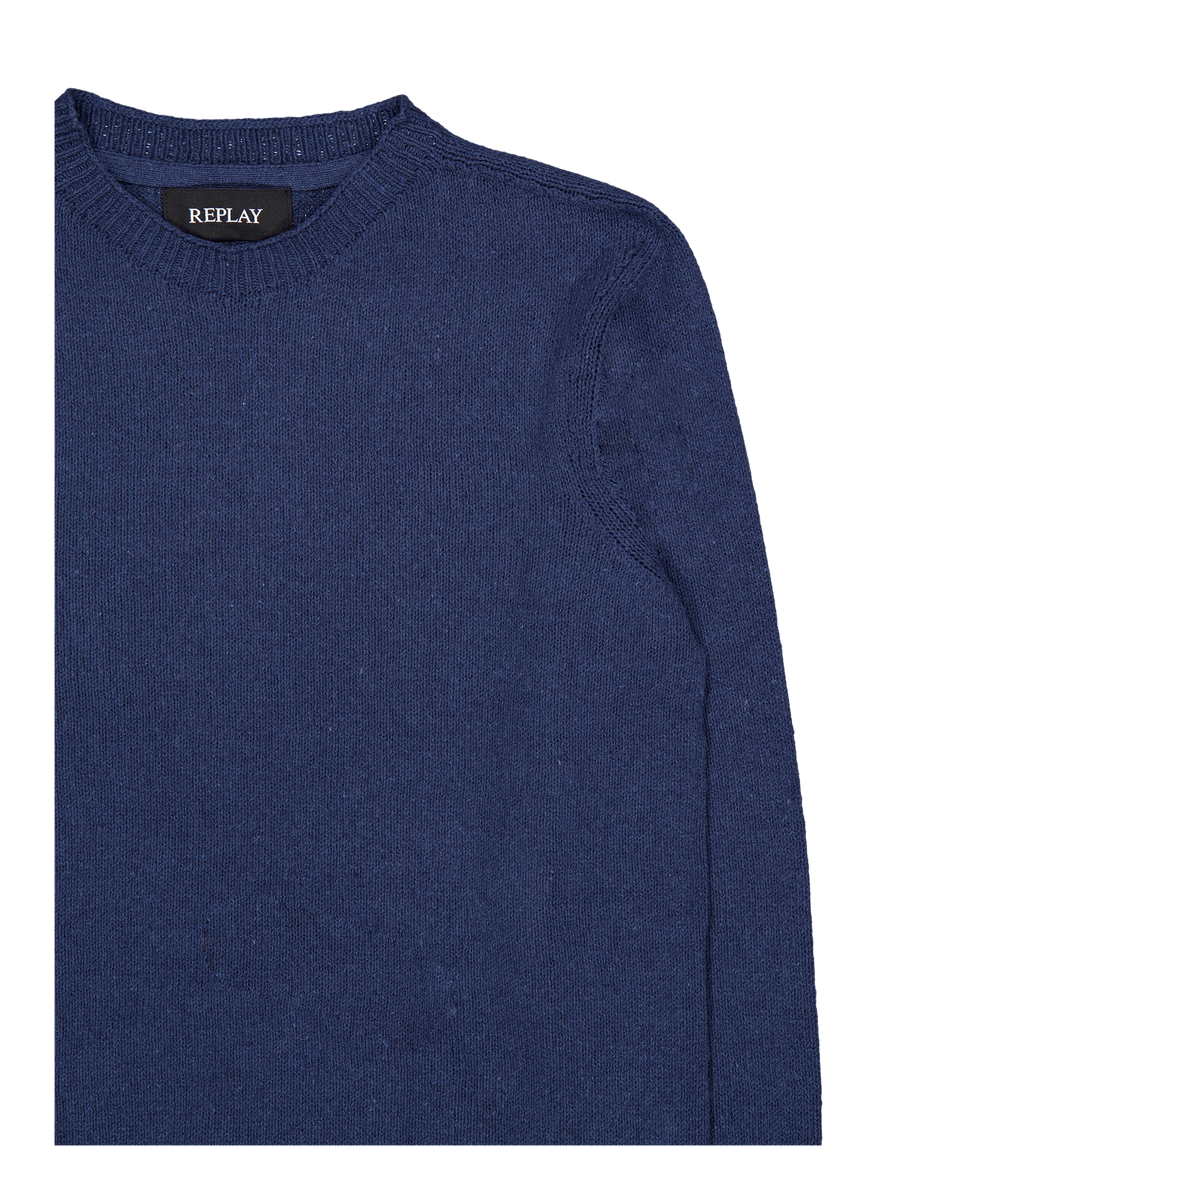 Cotton Knit Sweater 177